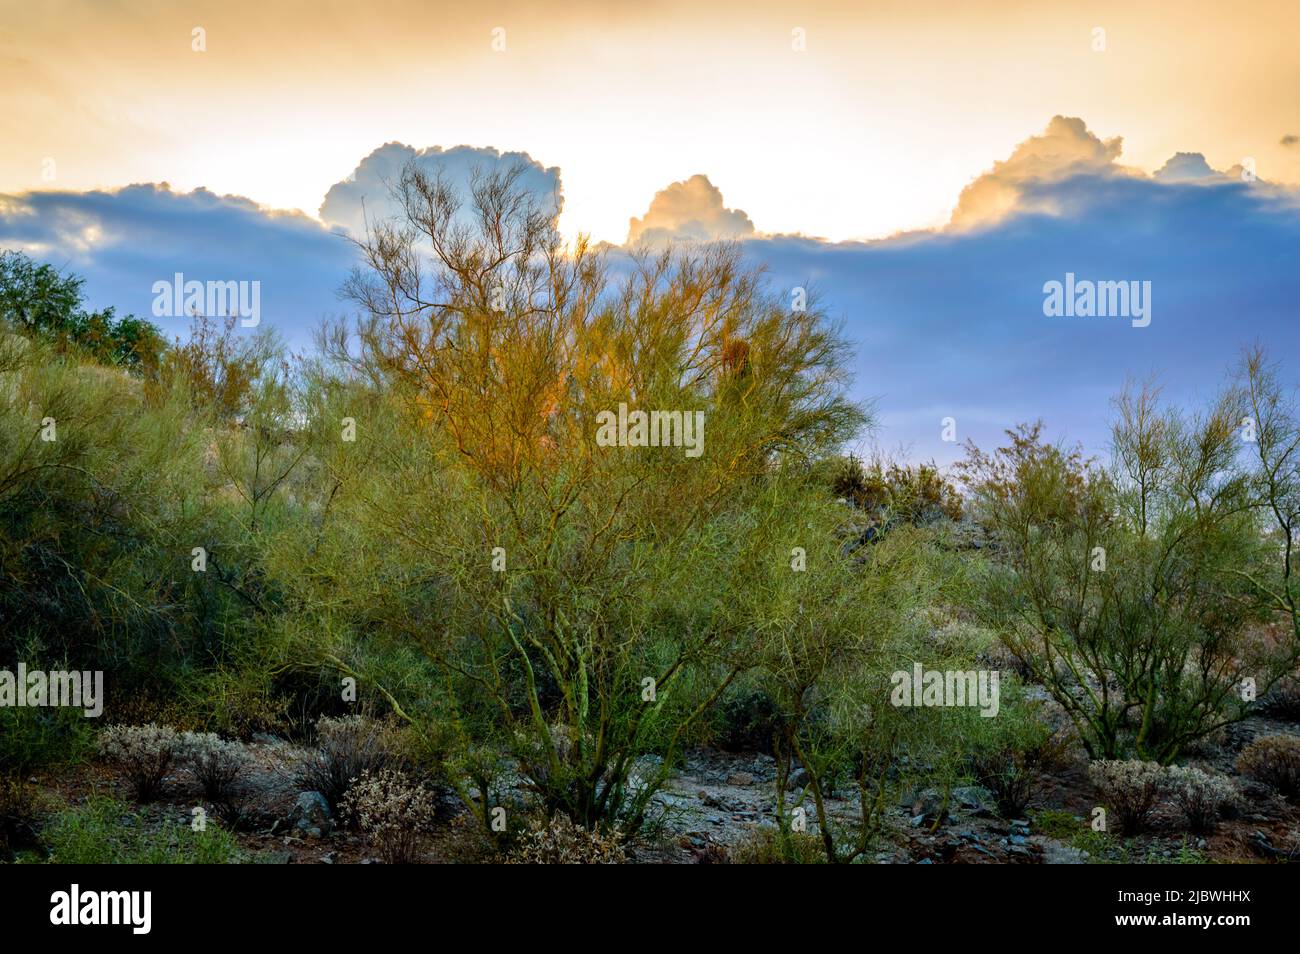 Phoenix hillside lush with desert plants and monsoon cloudy sky Stock Photo